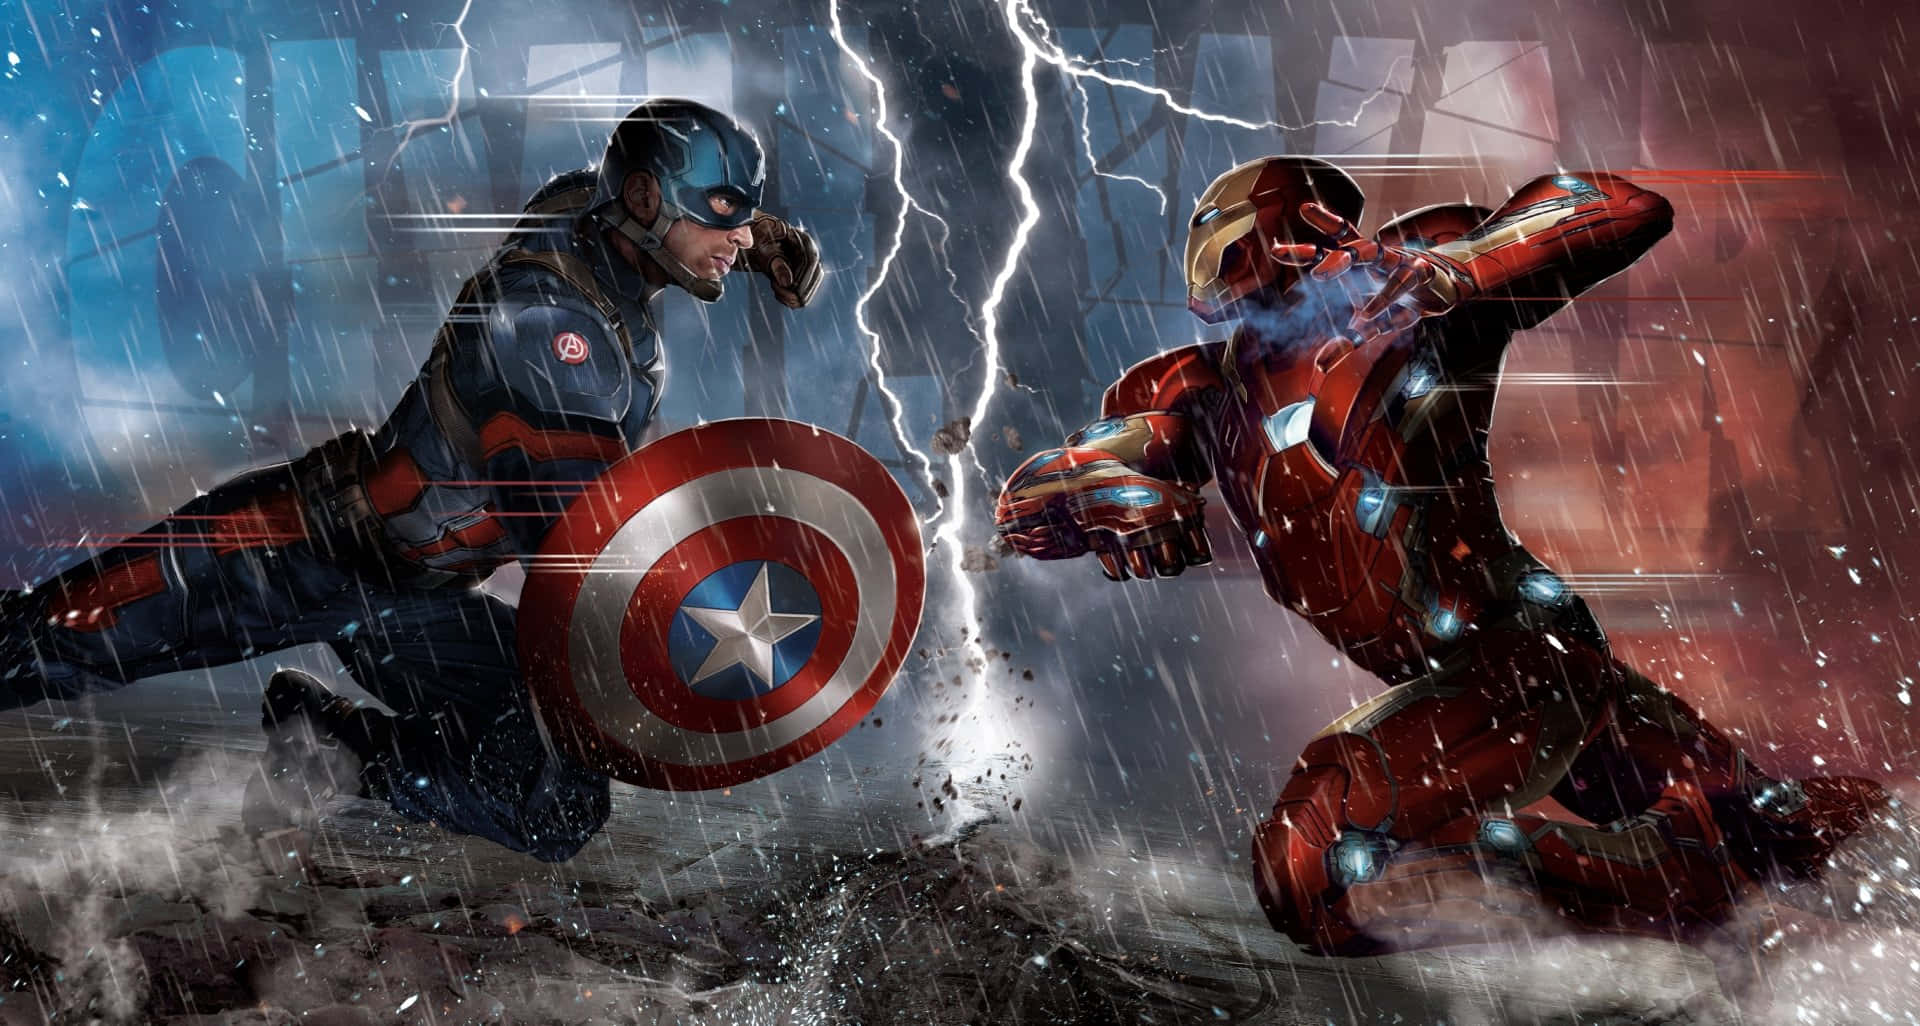 Captain America Versus Iron Man Digital Artwork Background